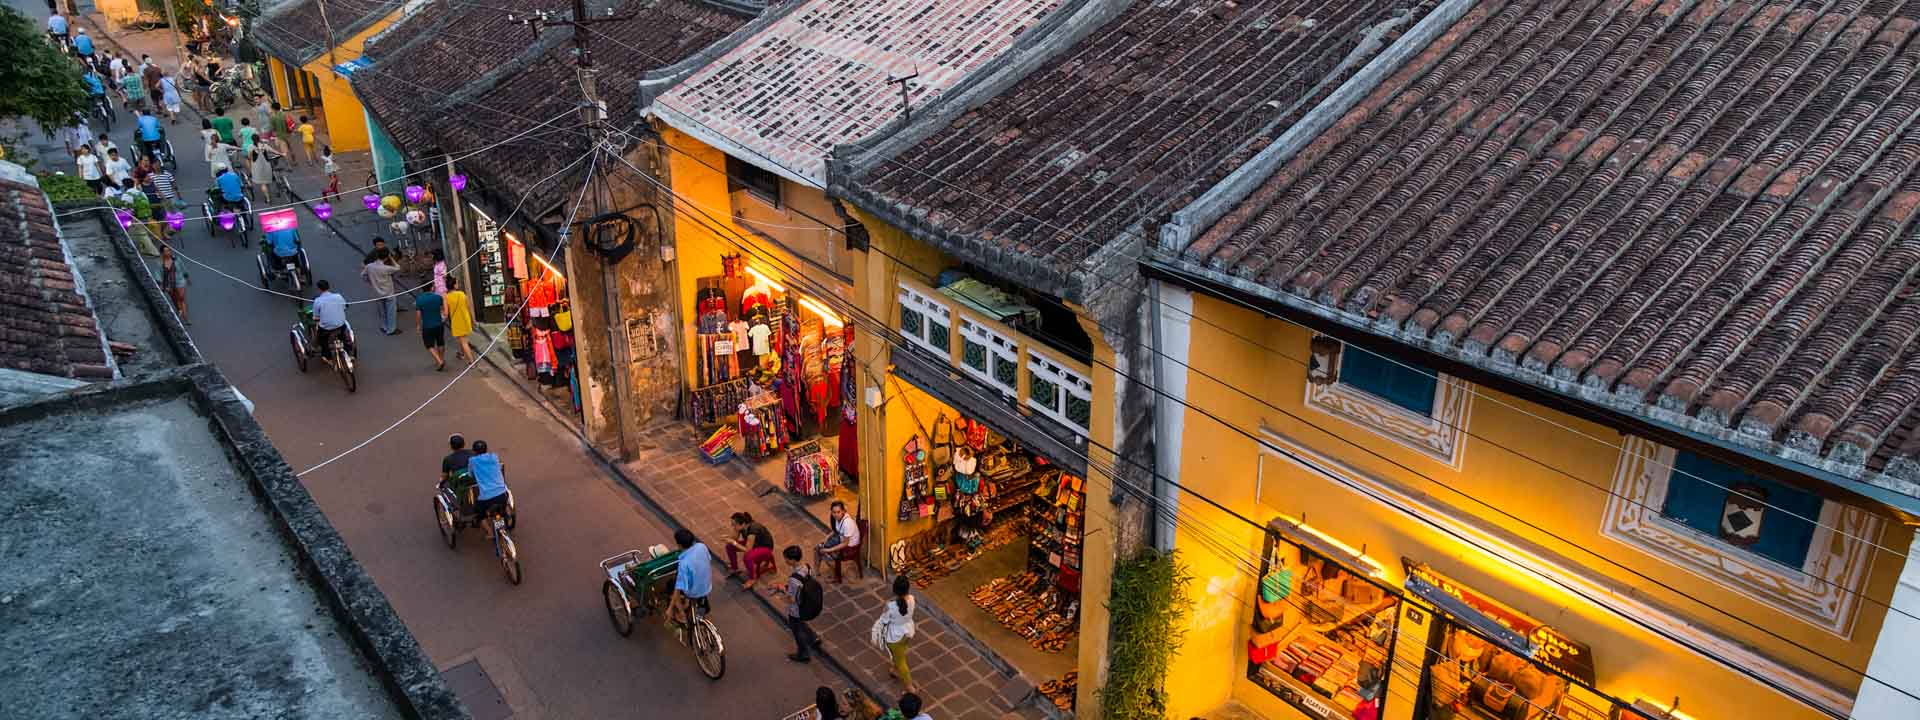 Classic Vietnam Cambodia Laos Tour Itinerary 3 weeks